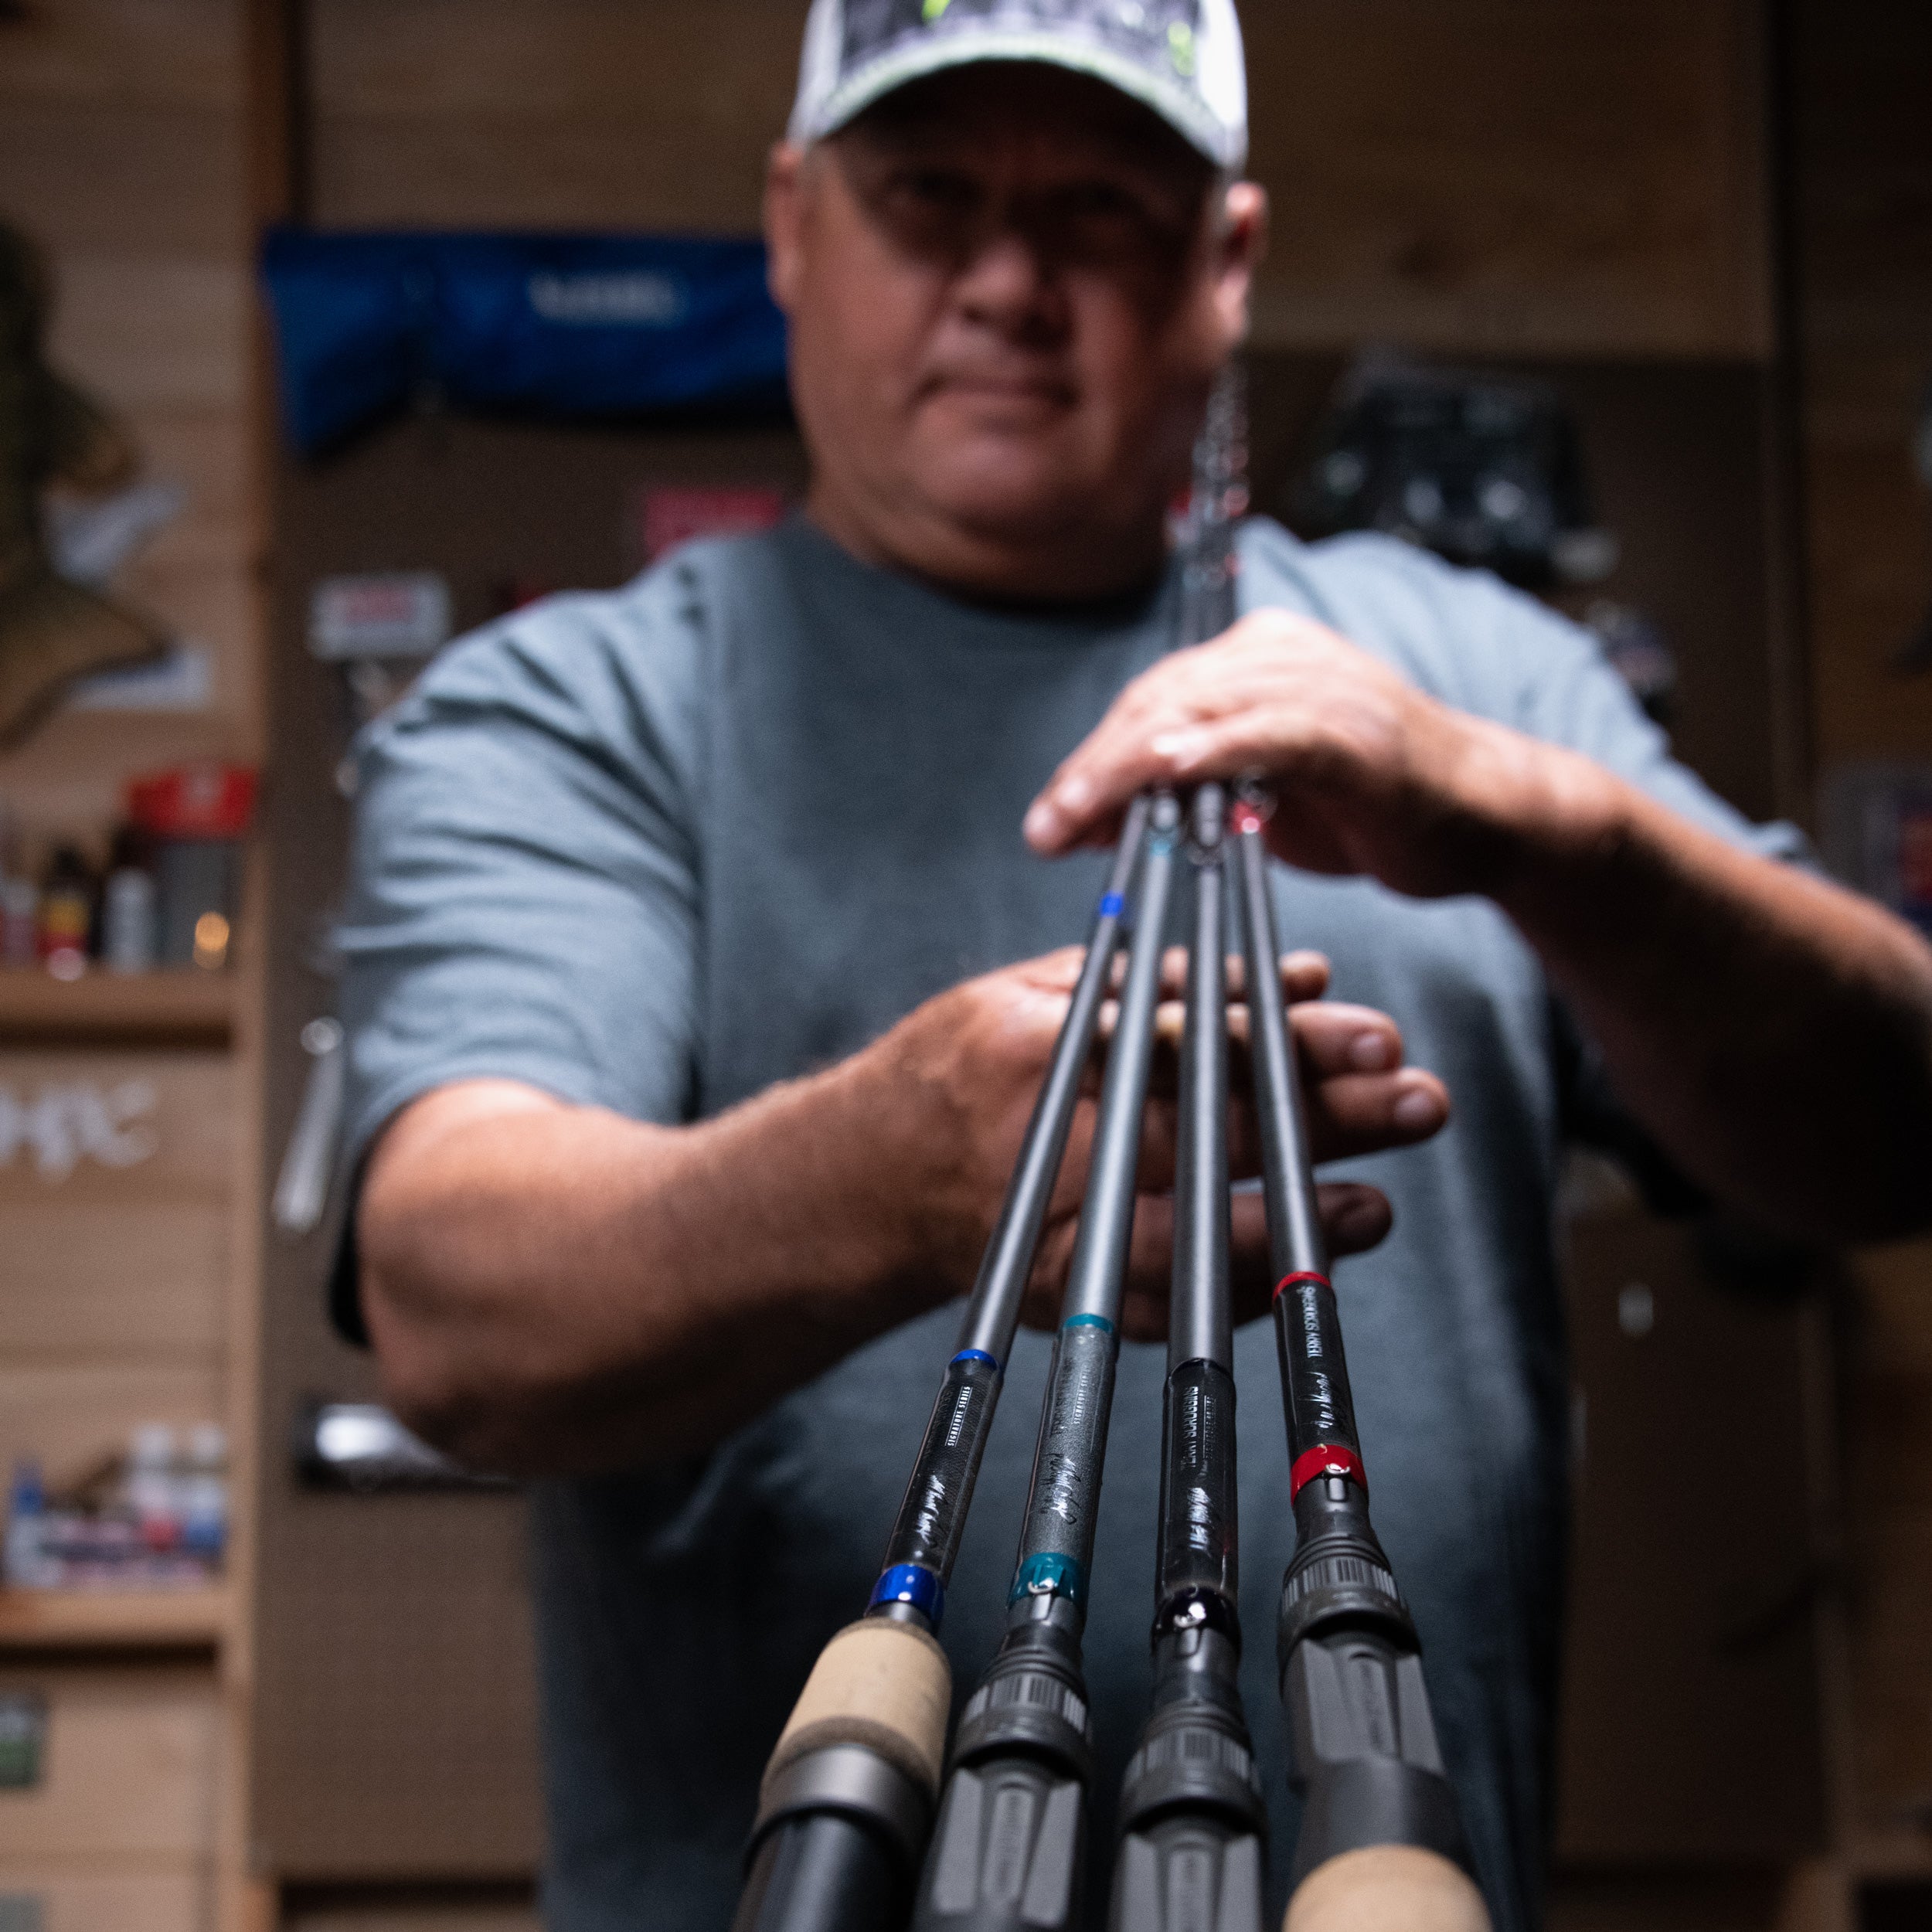 Terry Scroggins 7'9" X-Heavy Flipping Rod Component Kit